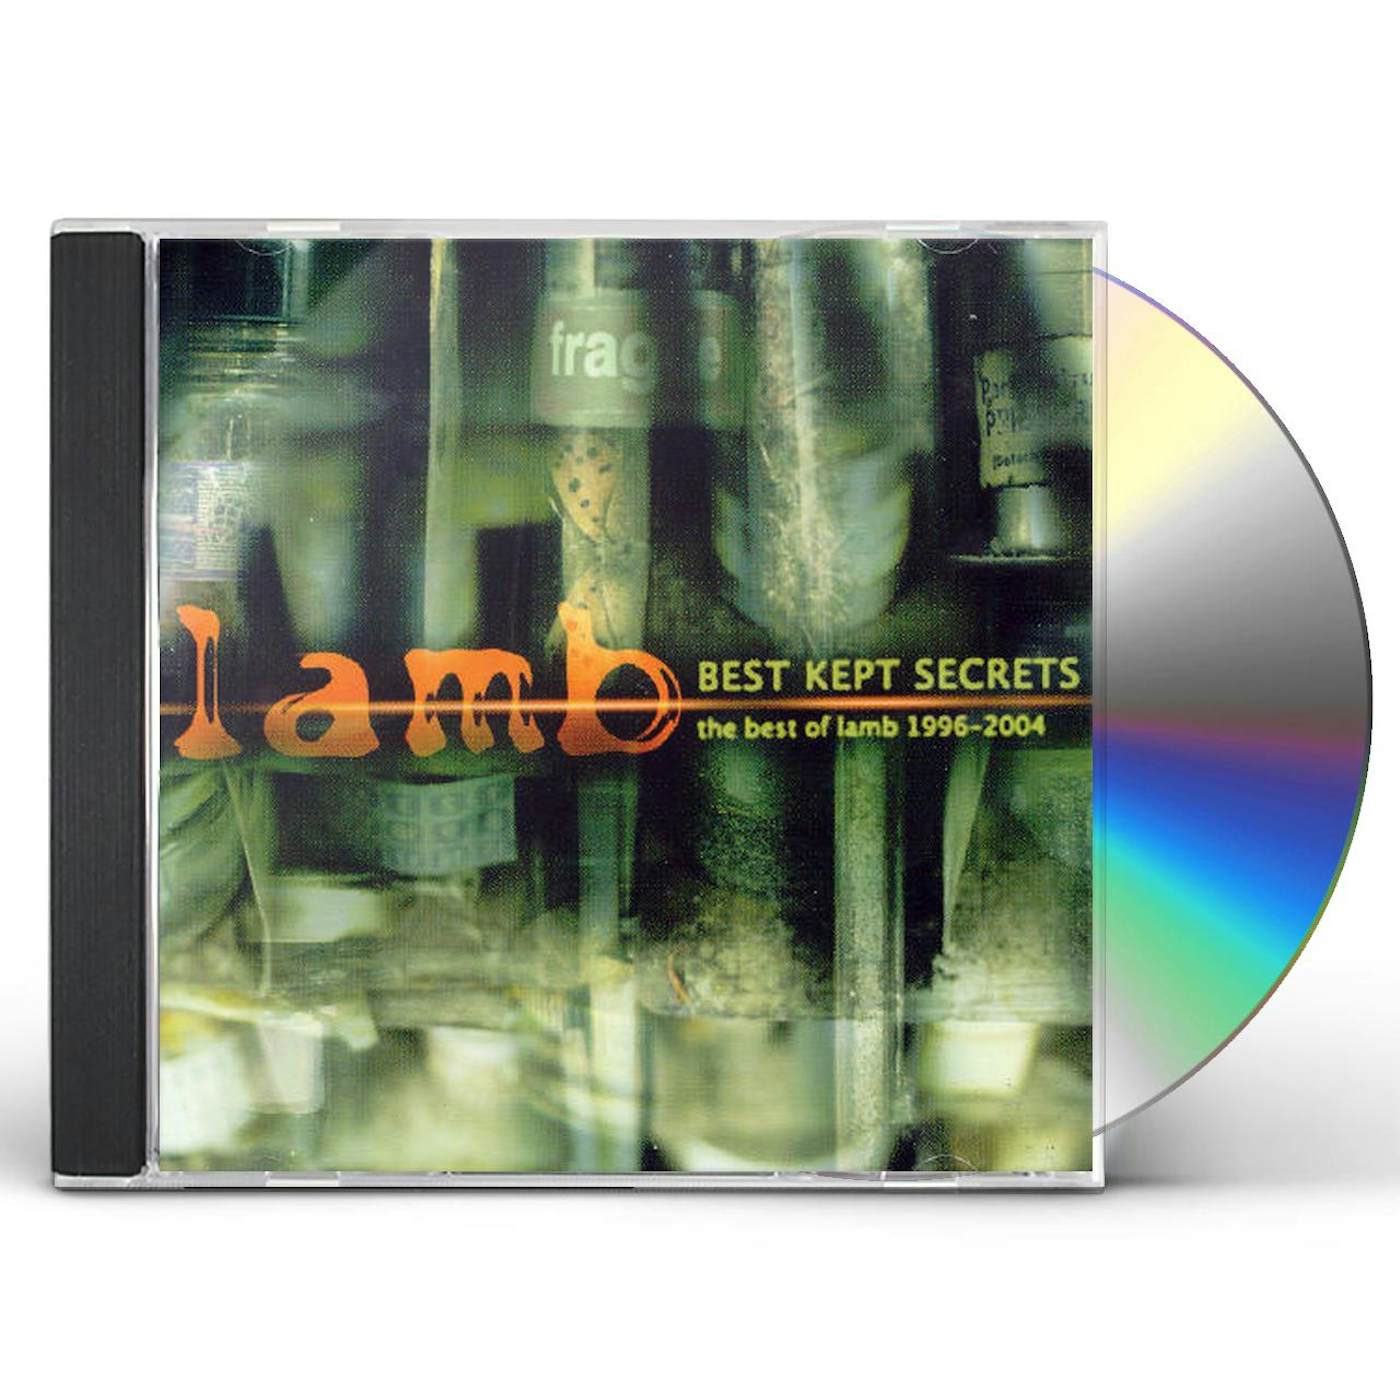 BEST KEPT SECRETS: BEST OF LAMB 1996-2004 CD